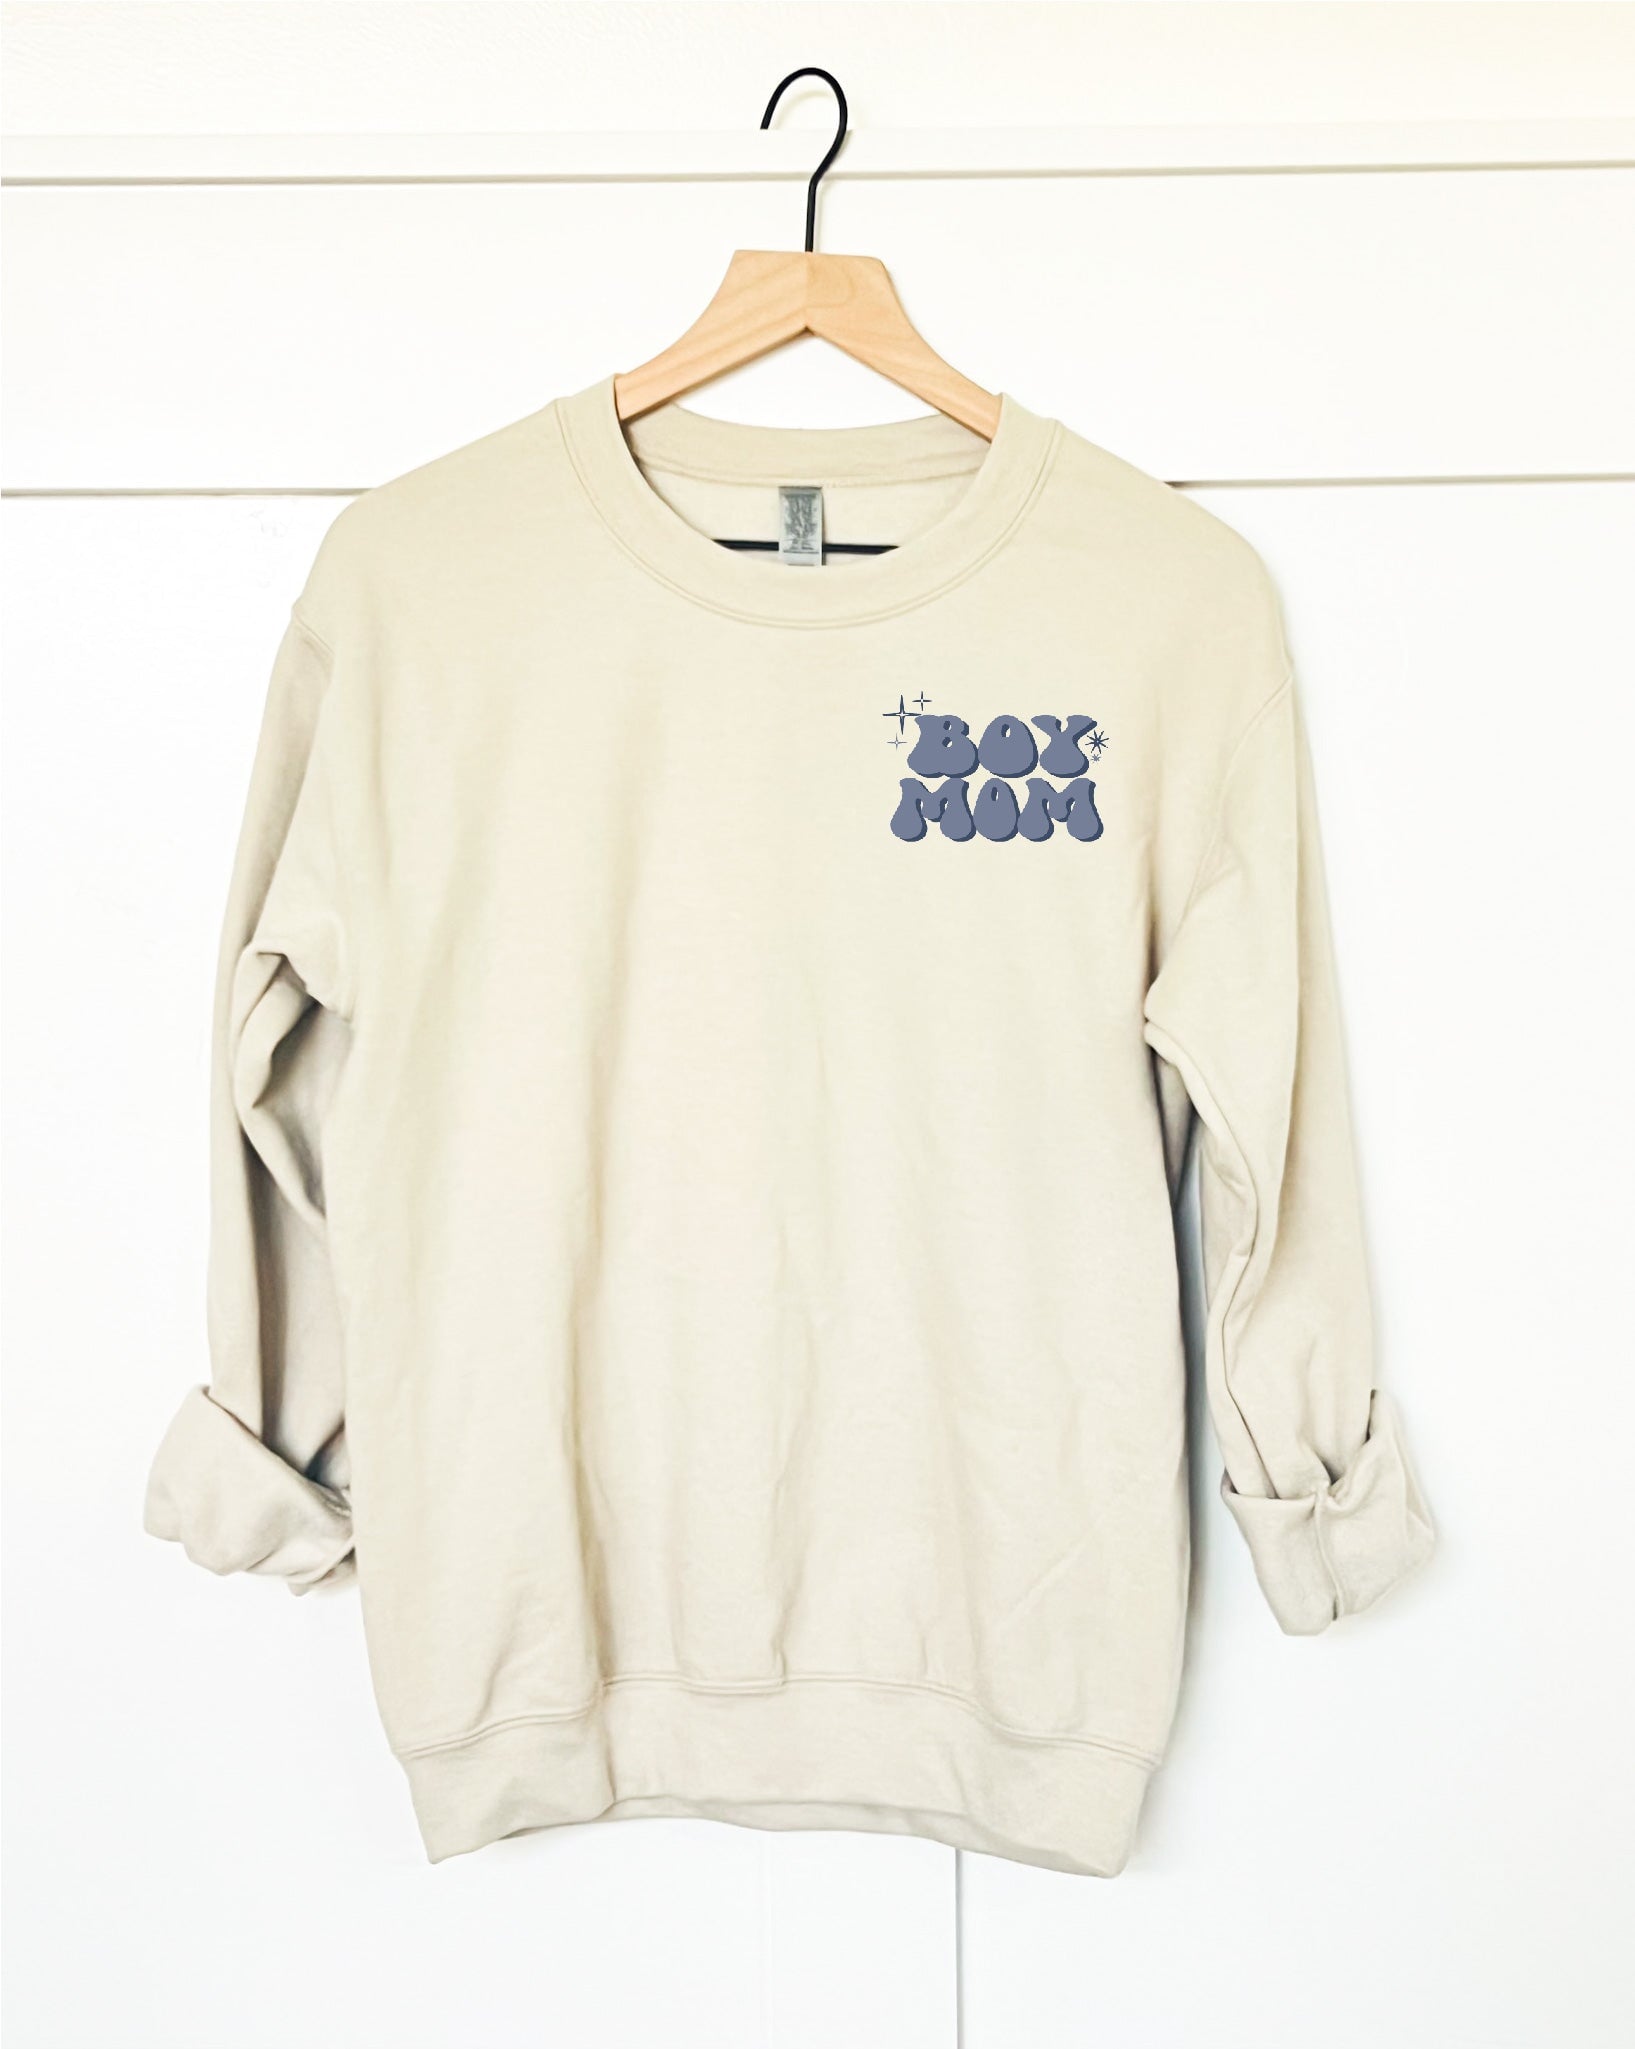 In my boy mom era back print basic sweatshirt Mom collection Gildan 18000 sweatshirt 